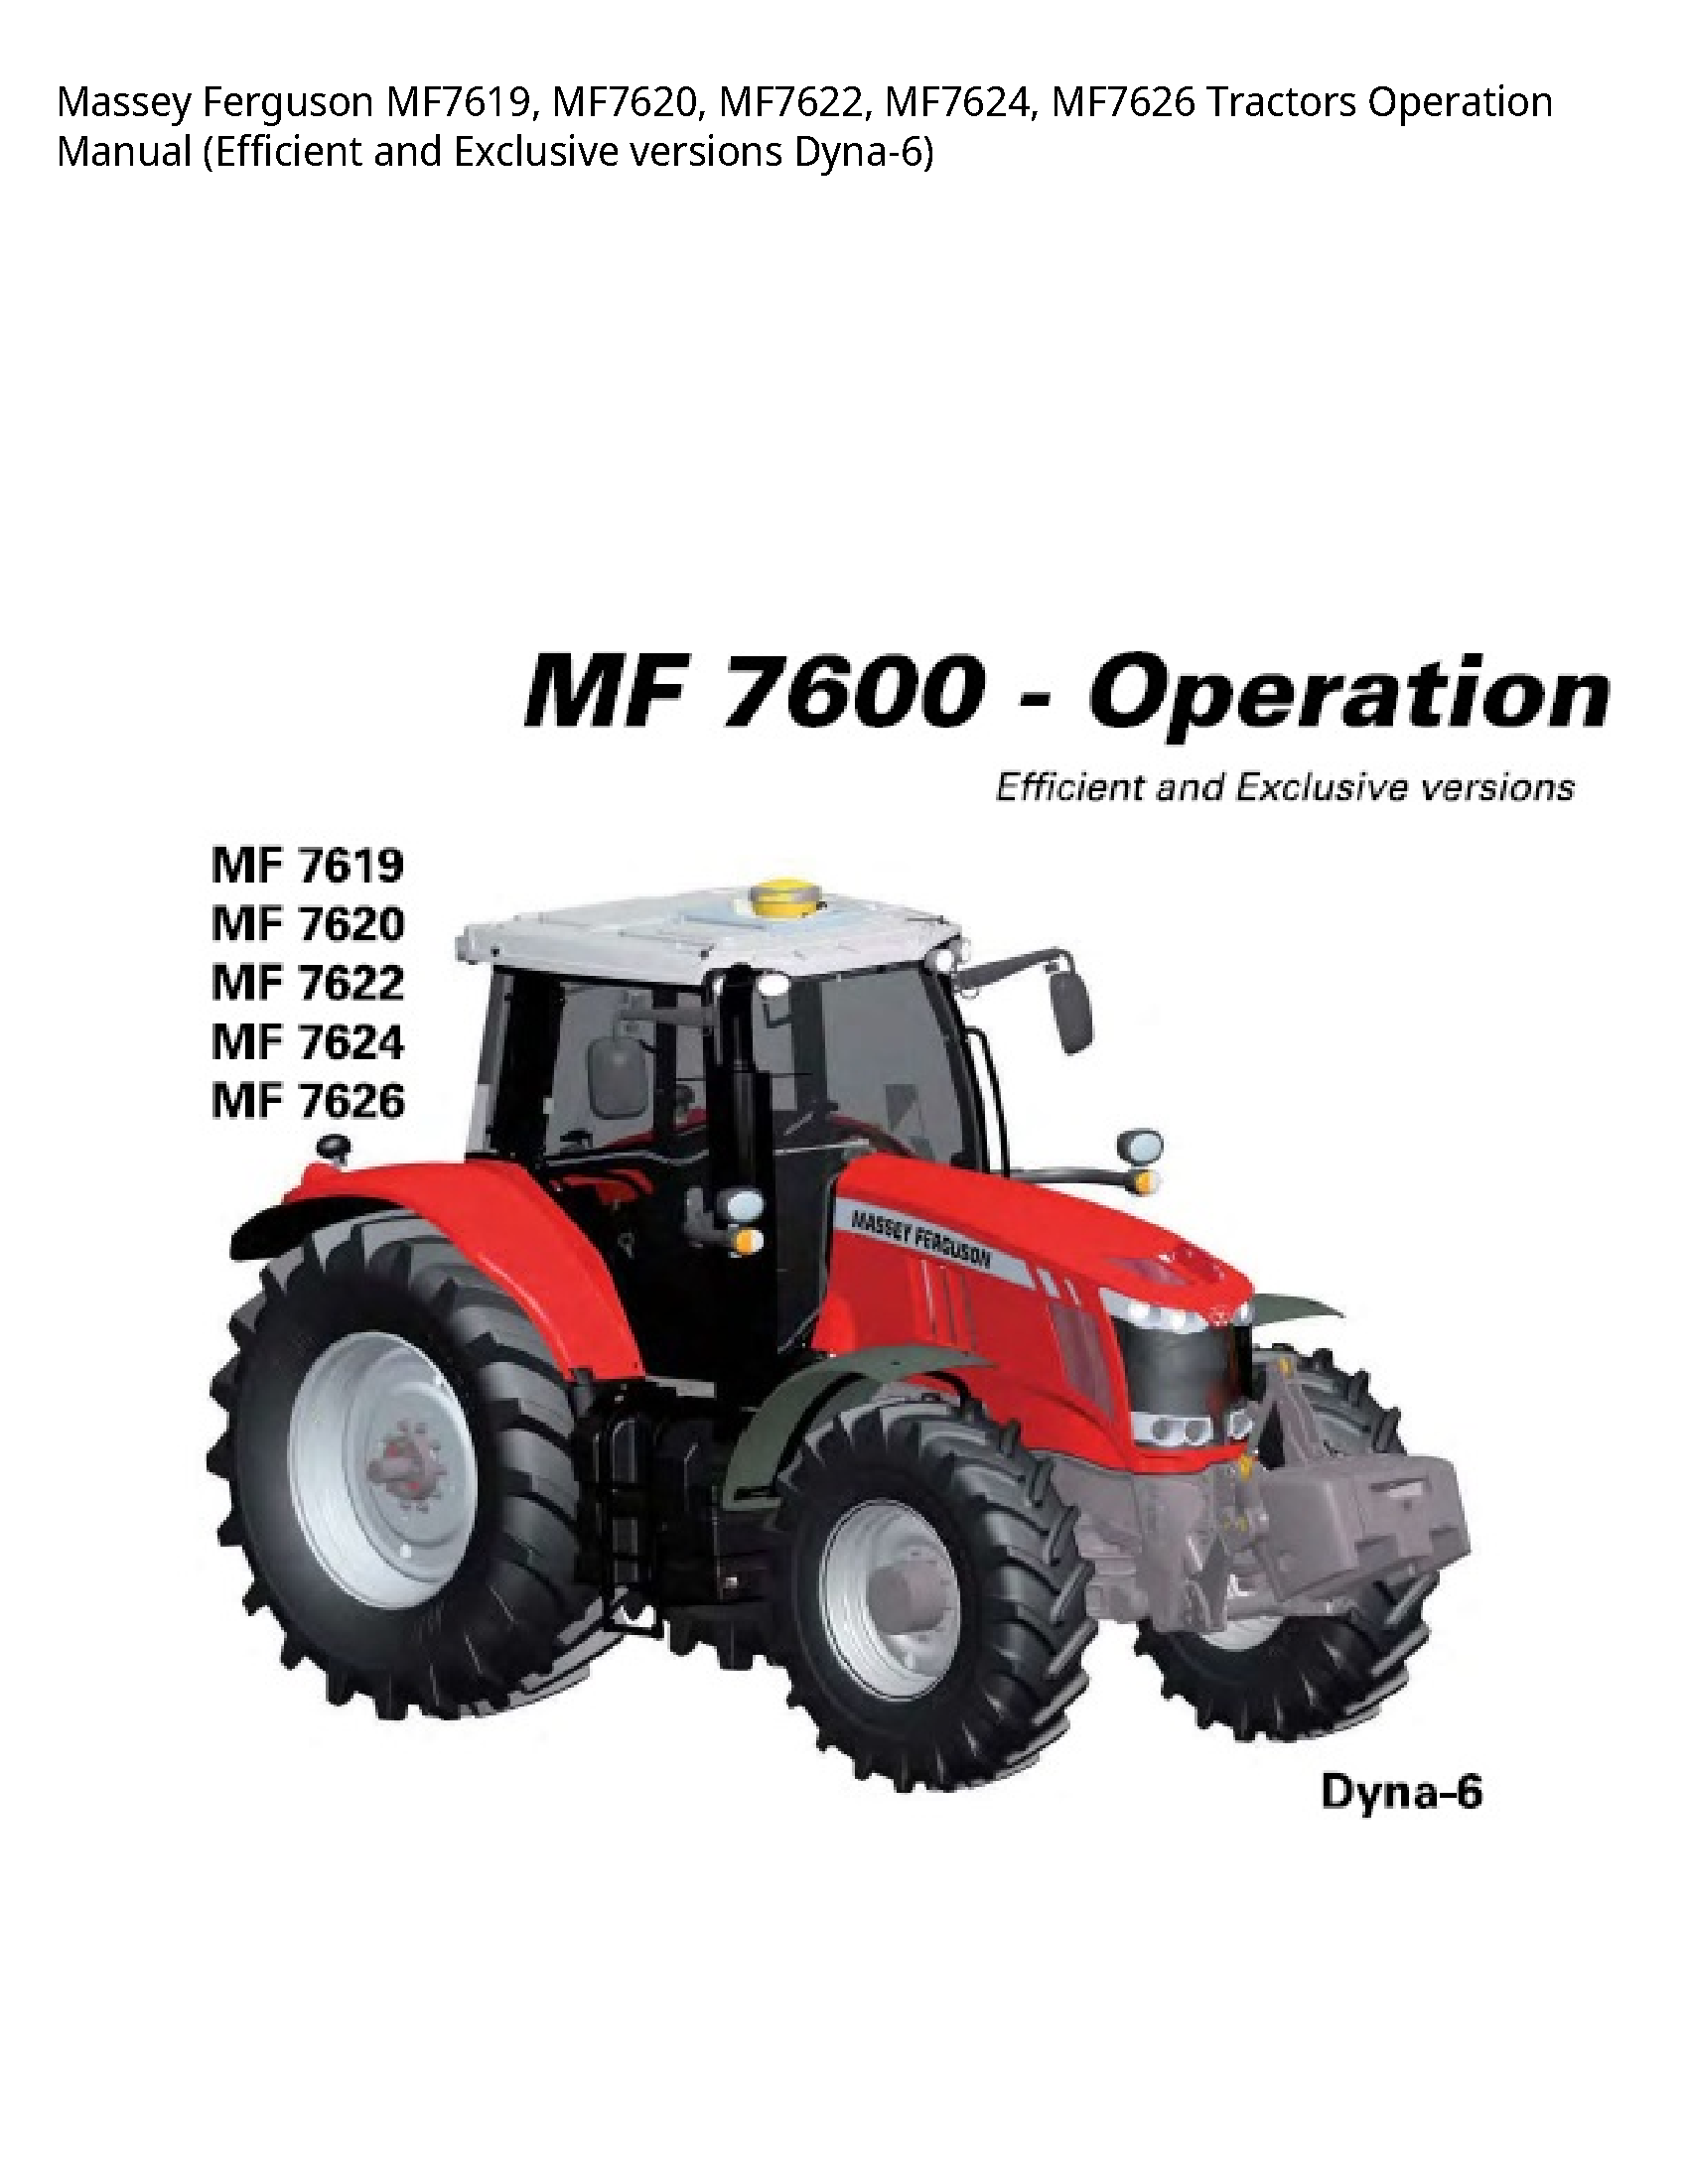 Massey Ferguson MF7619 Tractors Operation manual